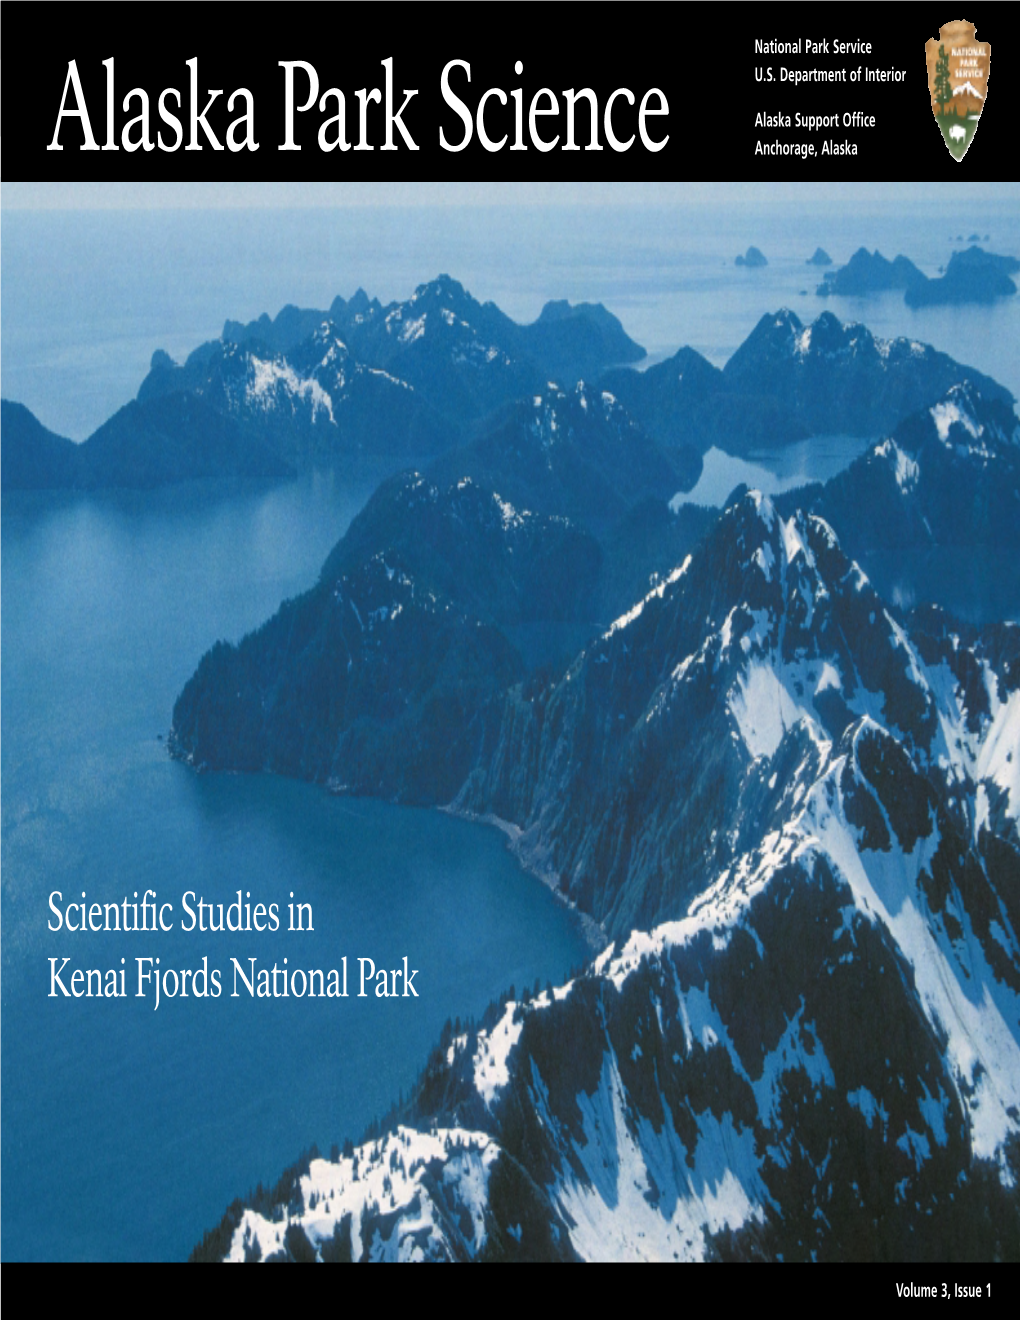 Scientific Studies in Kenai Fjords National Park